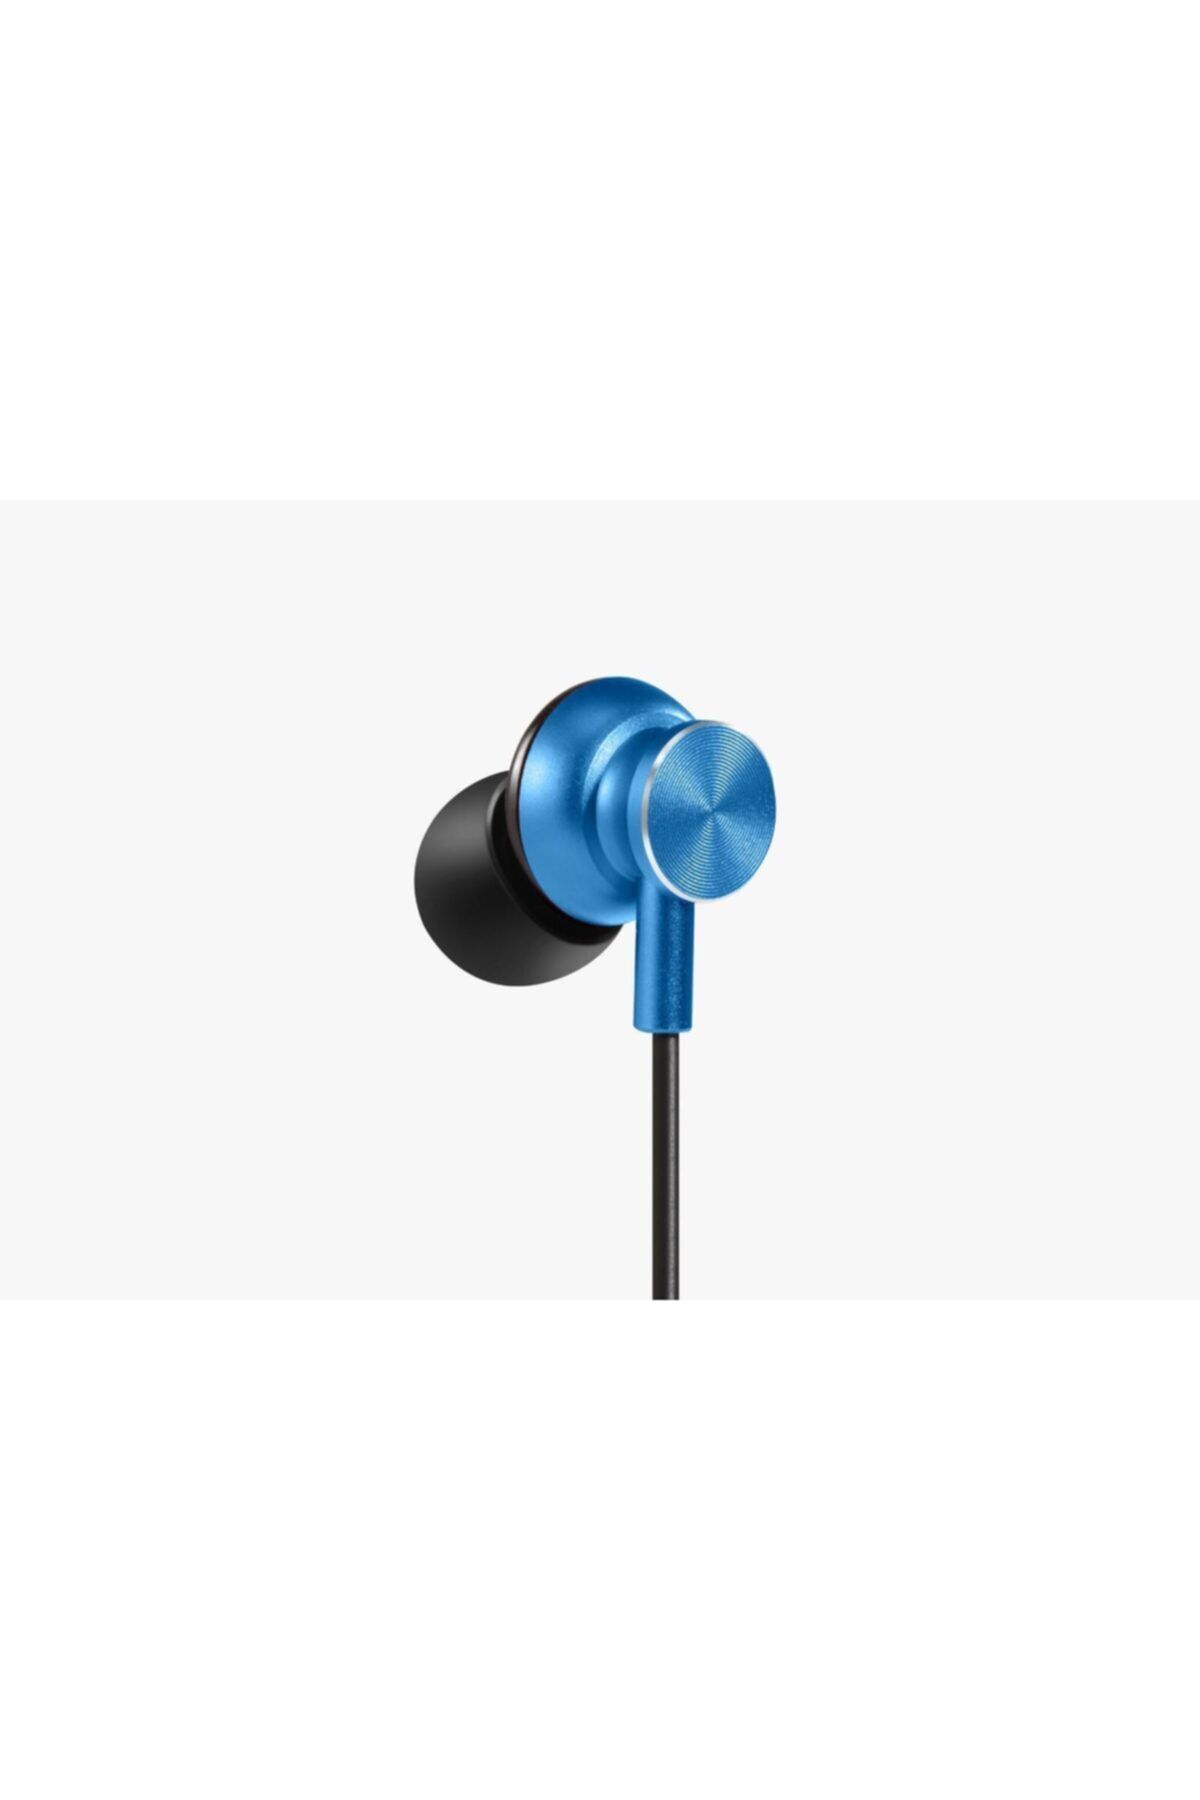 Piranha 2286 Mavi Wireless Bluetooth Kulakiçi Kulaklık (Metal Gövde Mıknatıslı) 2286pm